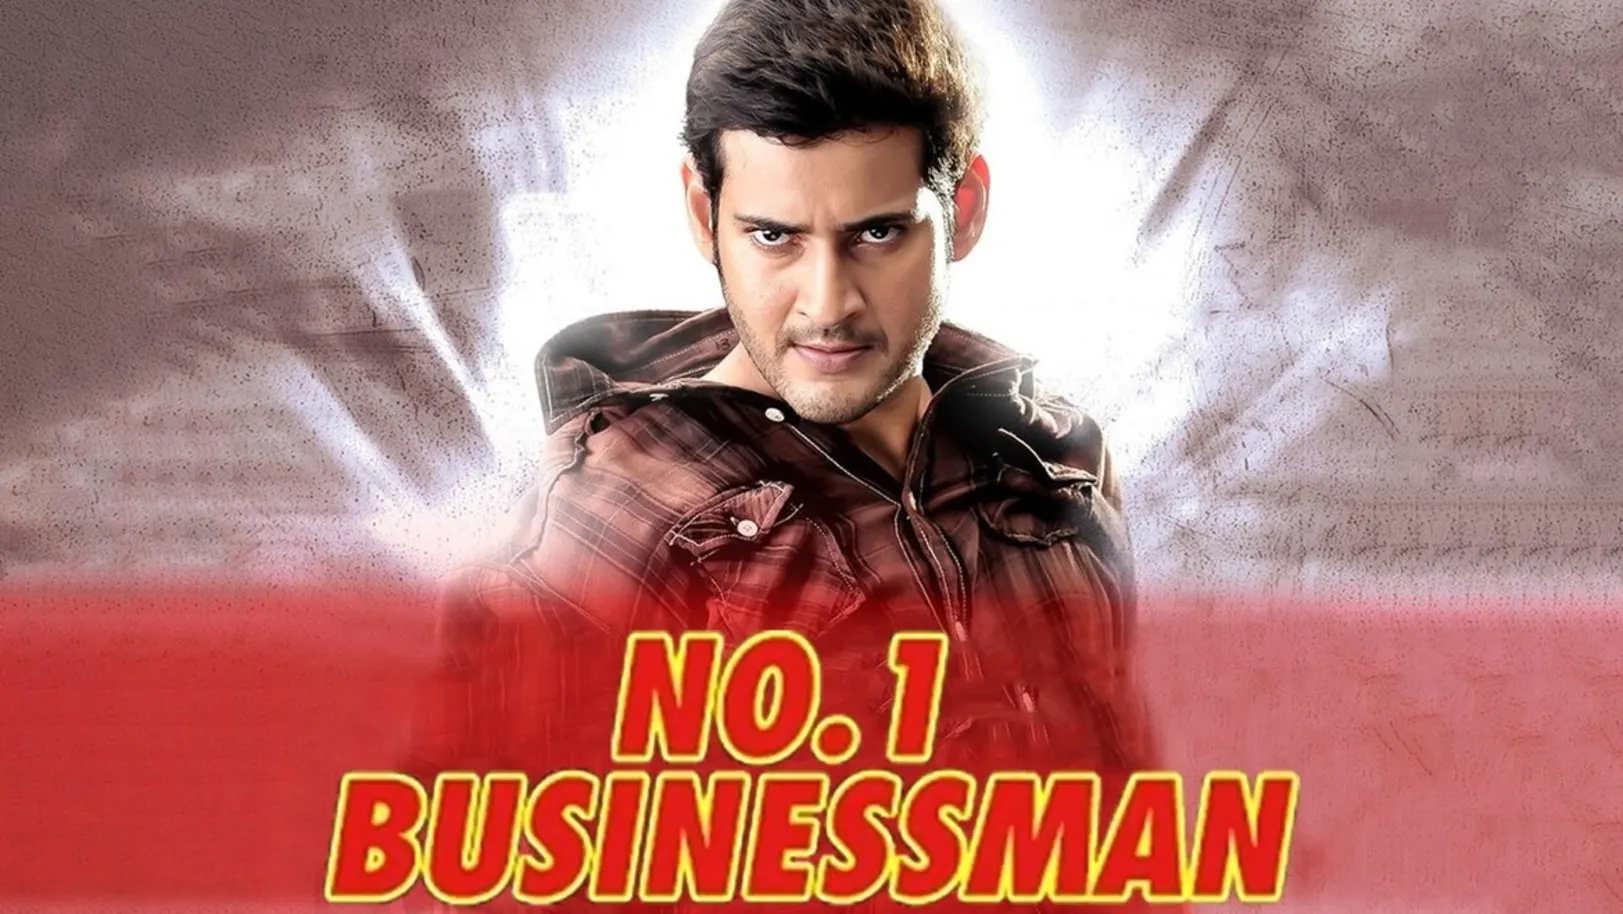 No 1 Businessman Streaming Now On Zee Cinema HD